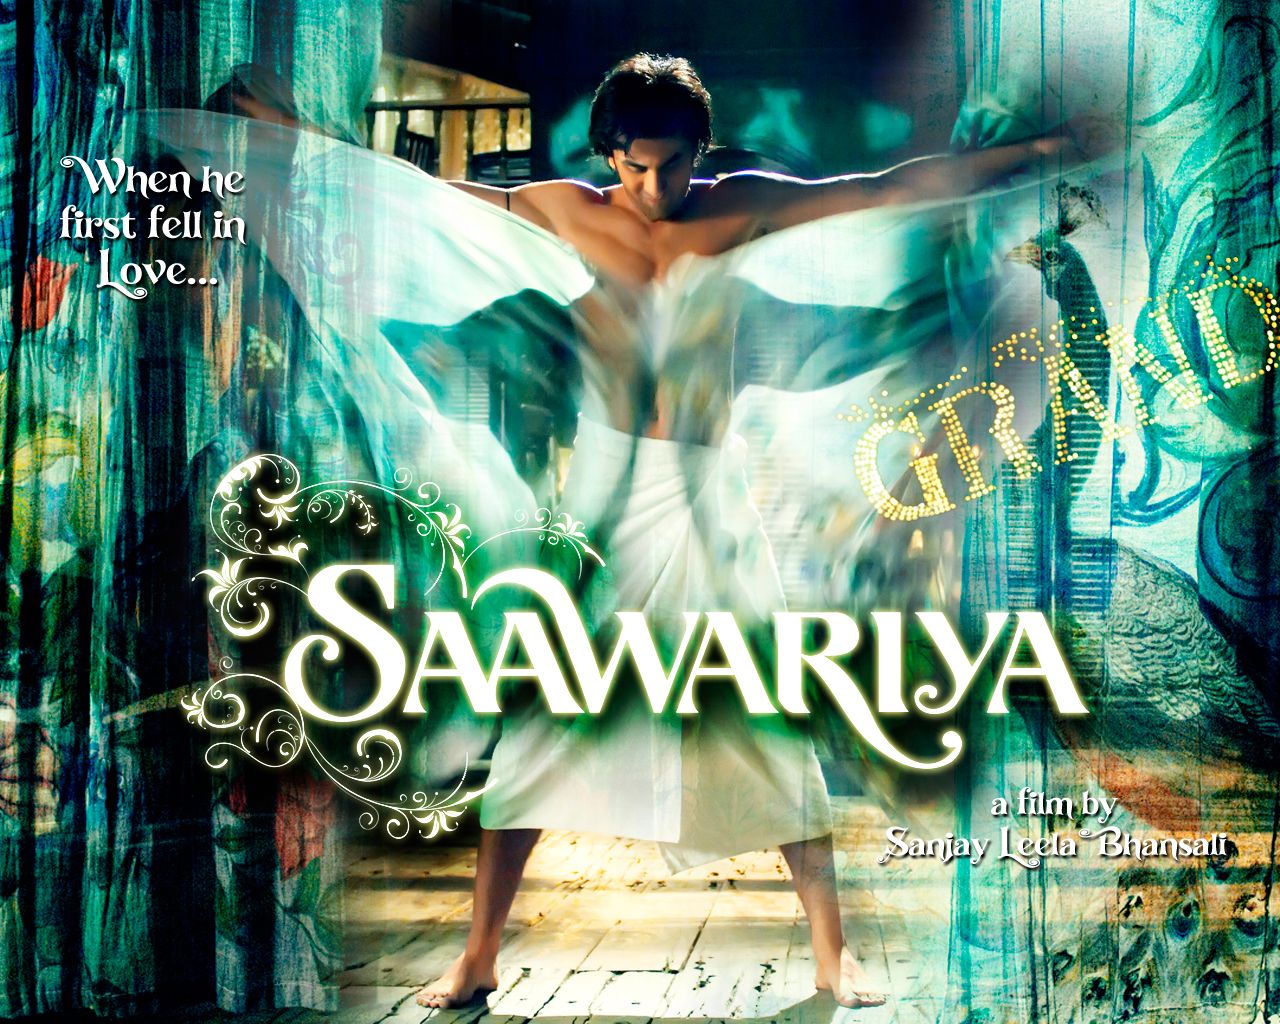 Download High quality Saawariya wallpaper / Movies / 1280x1024